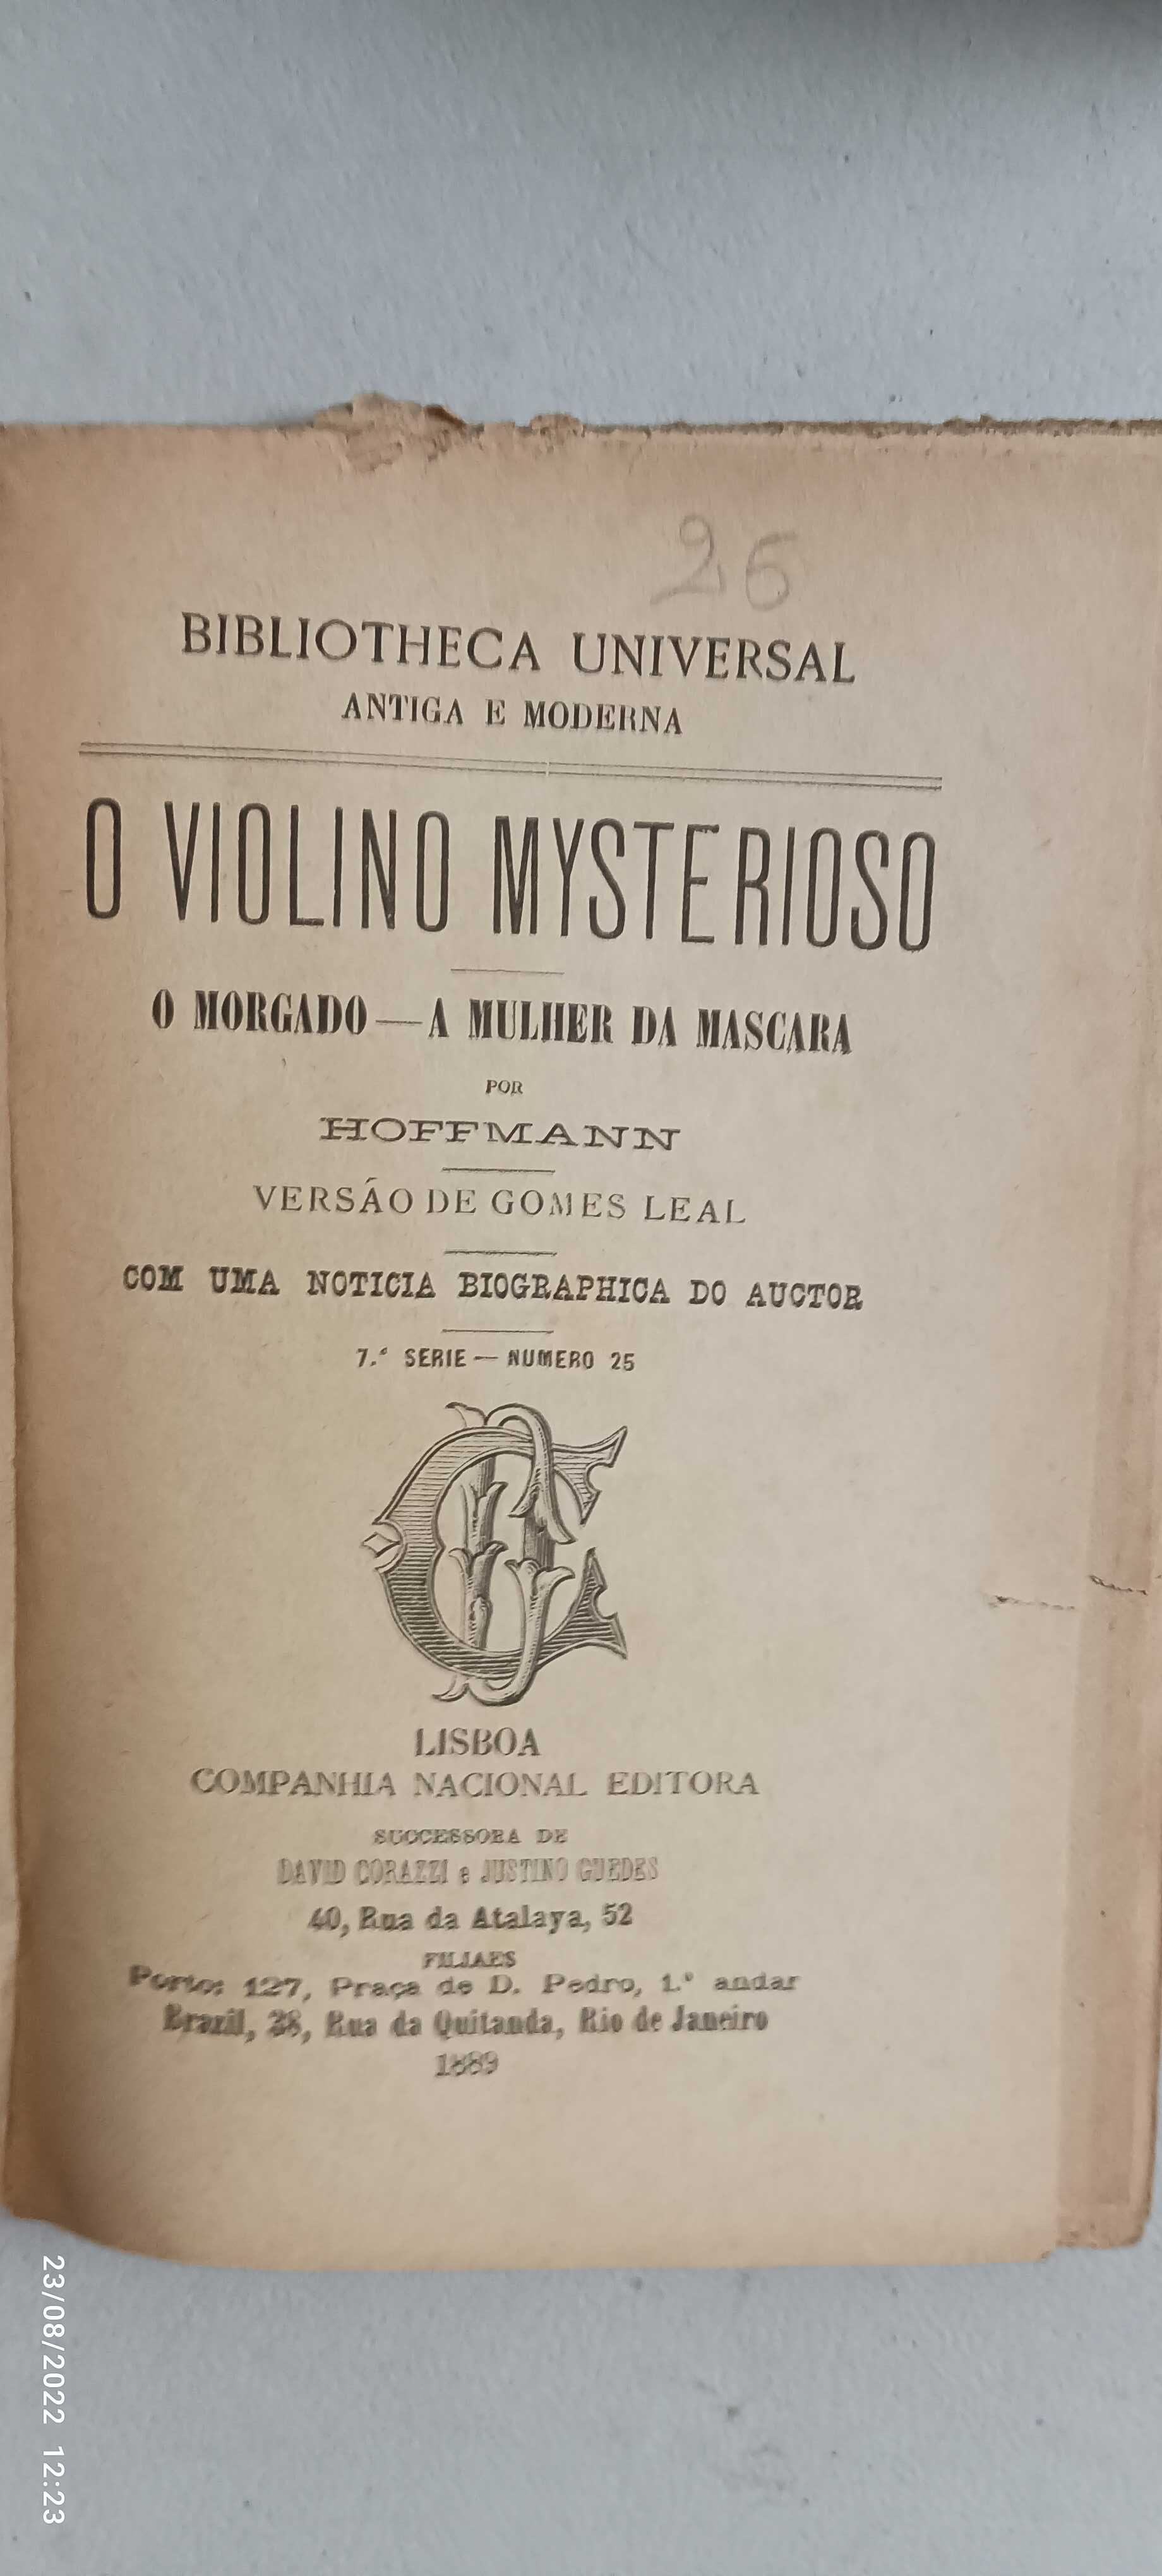 Livro Pa-3 - Hoffmann - O violino mysterioso